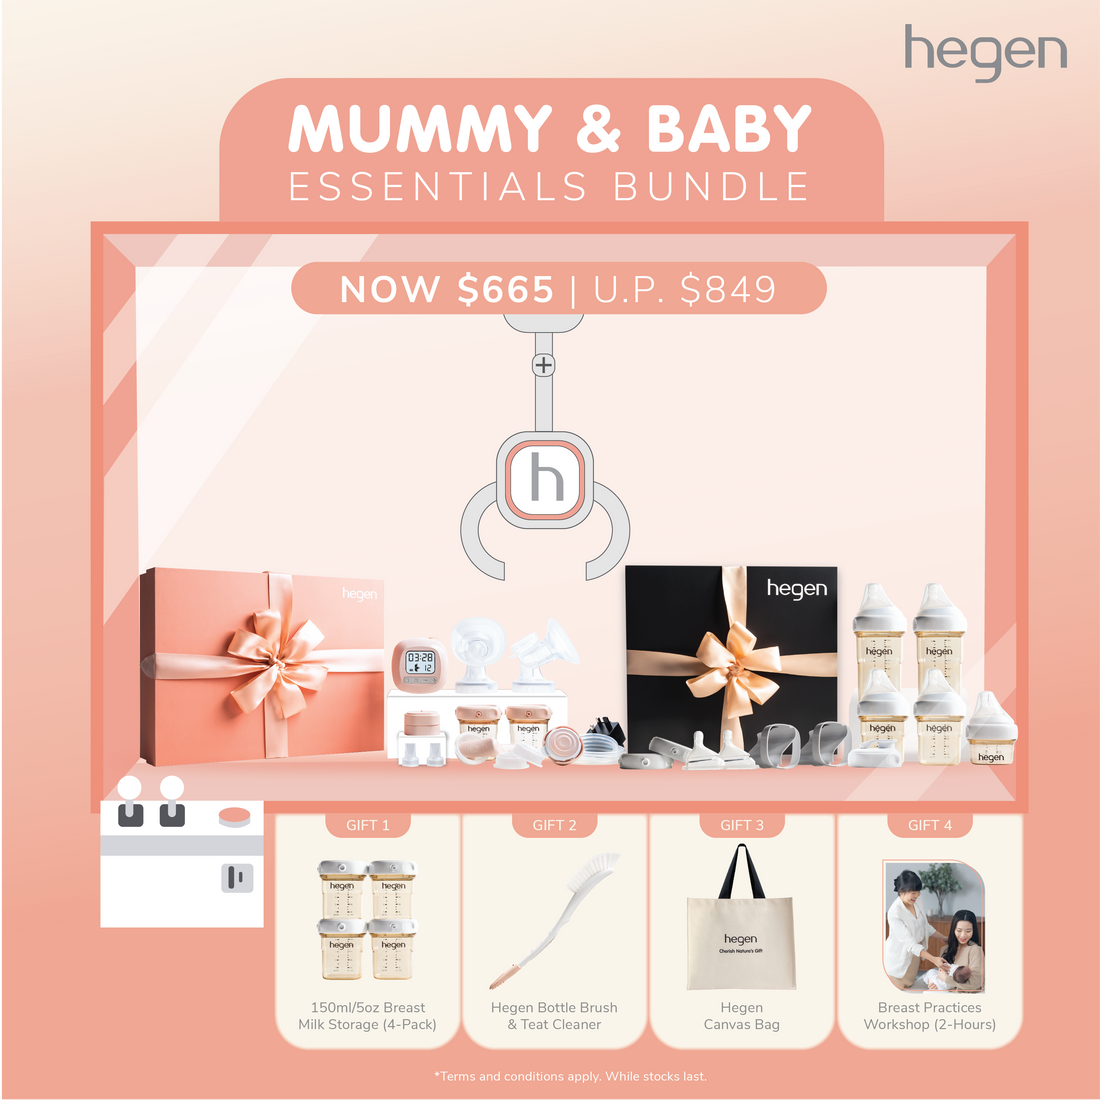 Hegen Mummy &amp; Baby Essentials Bundle (22% off + free gift worth $184 from 24/3 to 28/3)